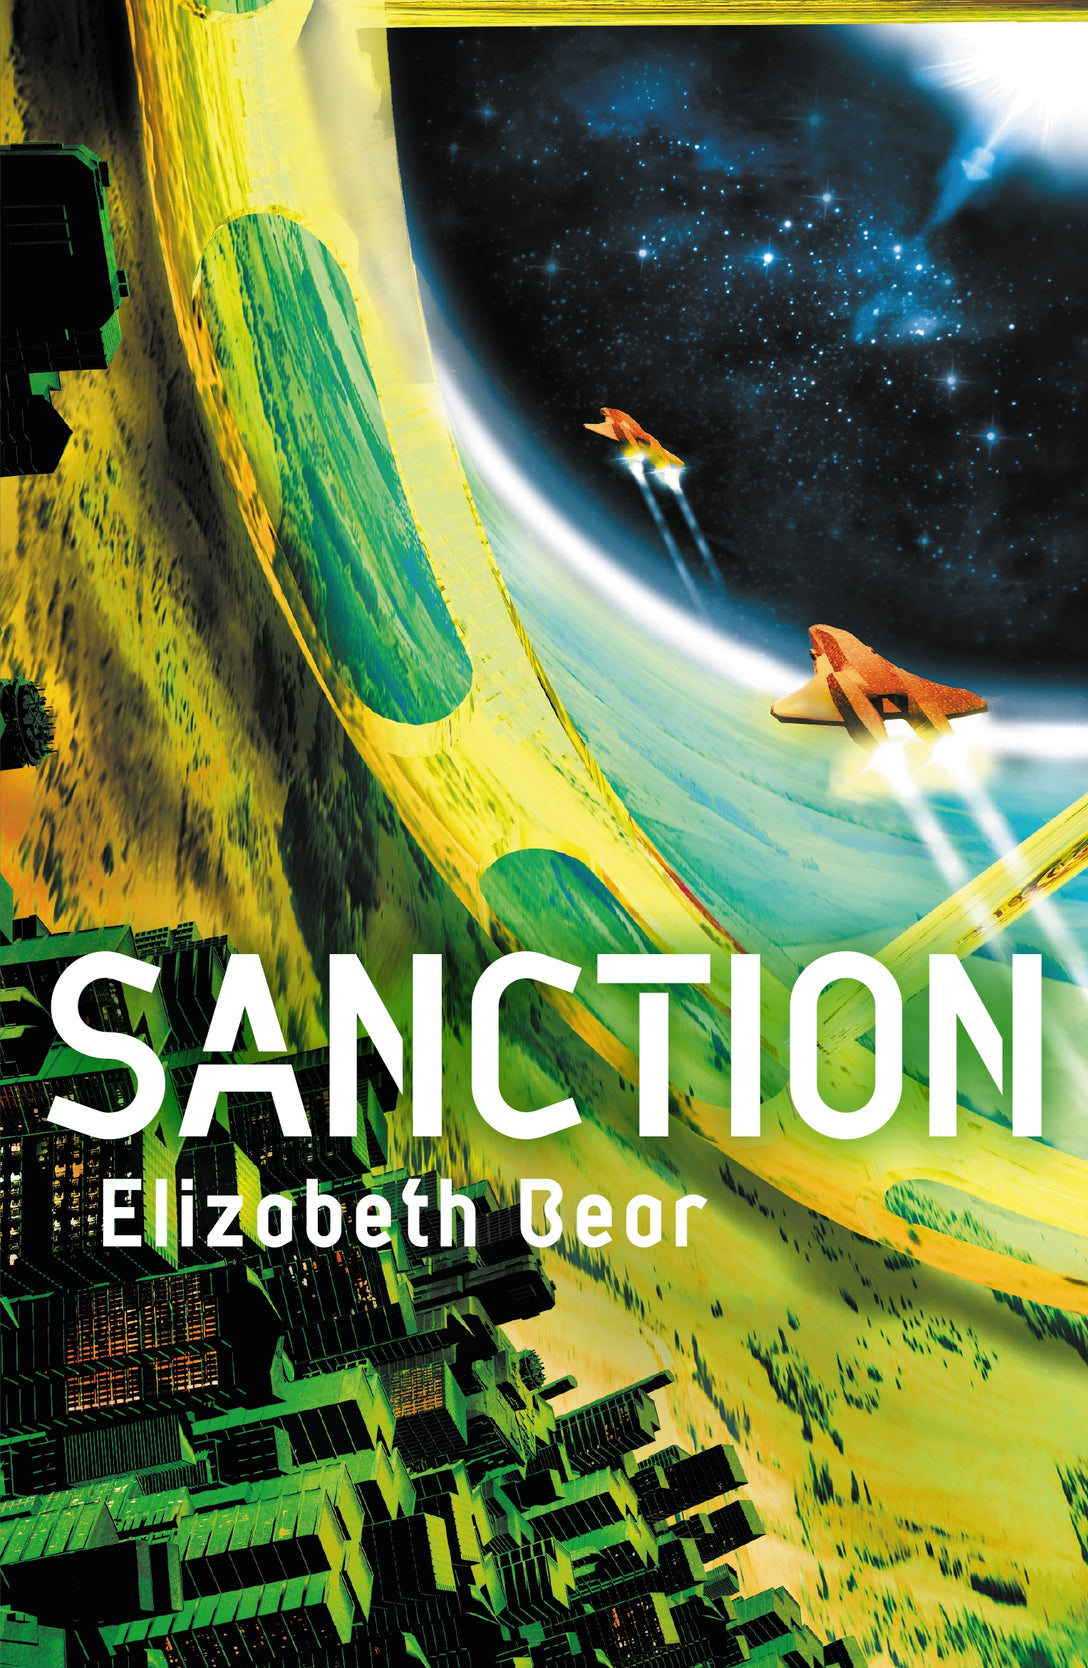 Sanction by Elizabeth Bear